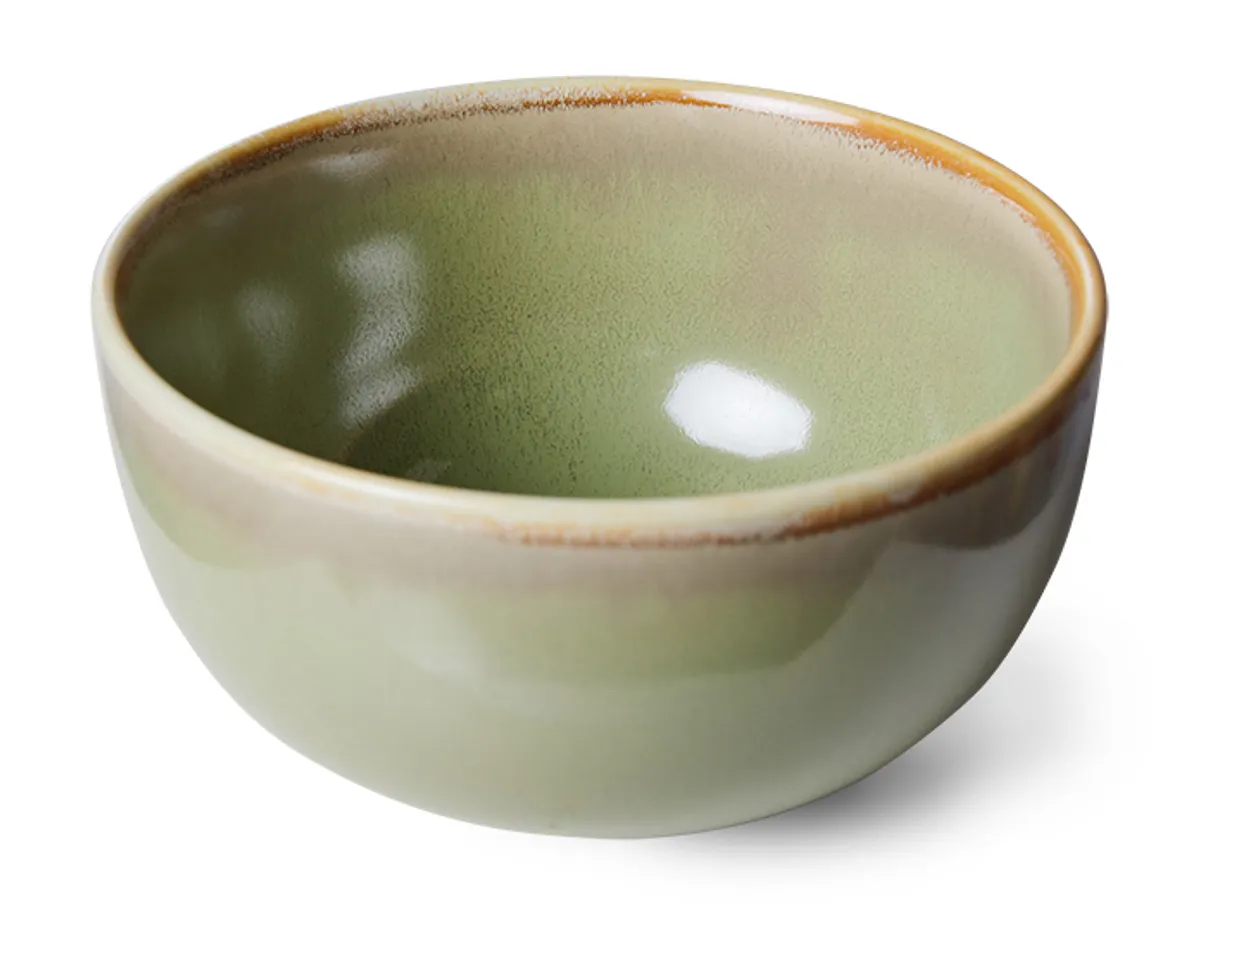 Chef ceramics: bowl, moss green